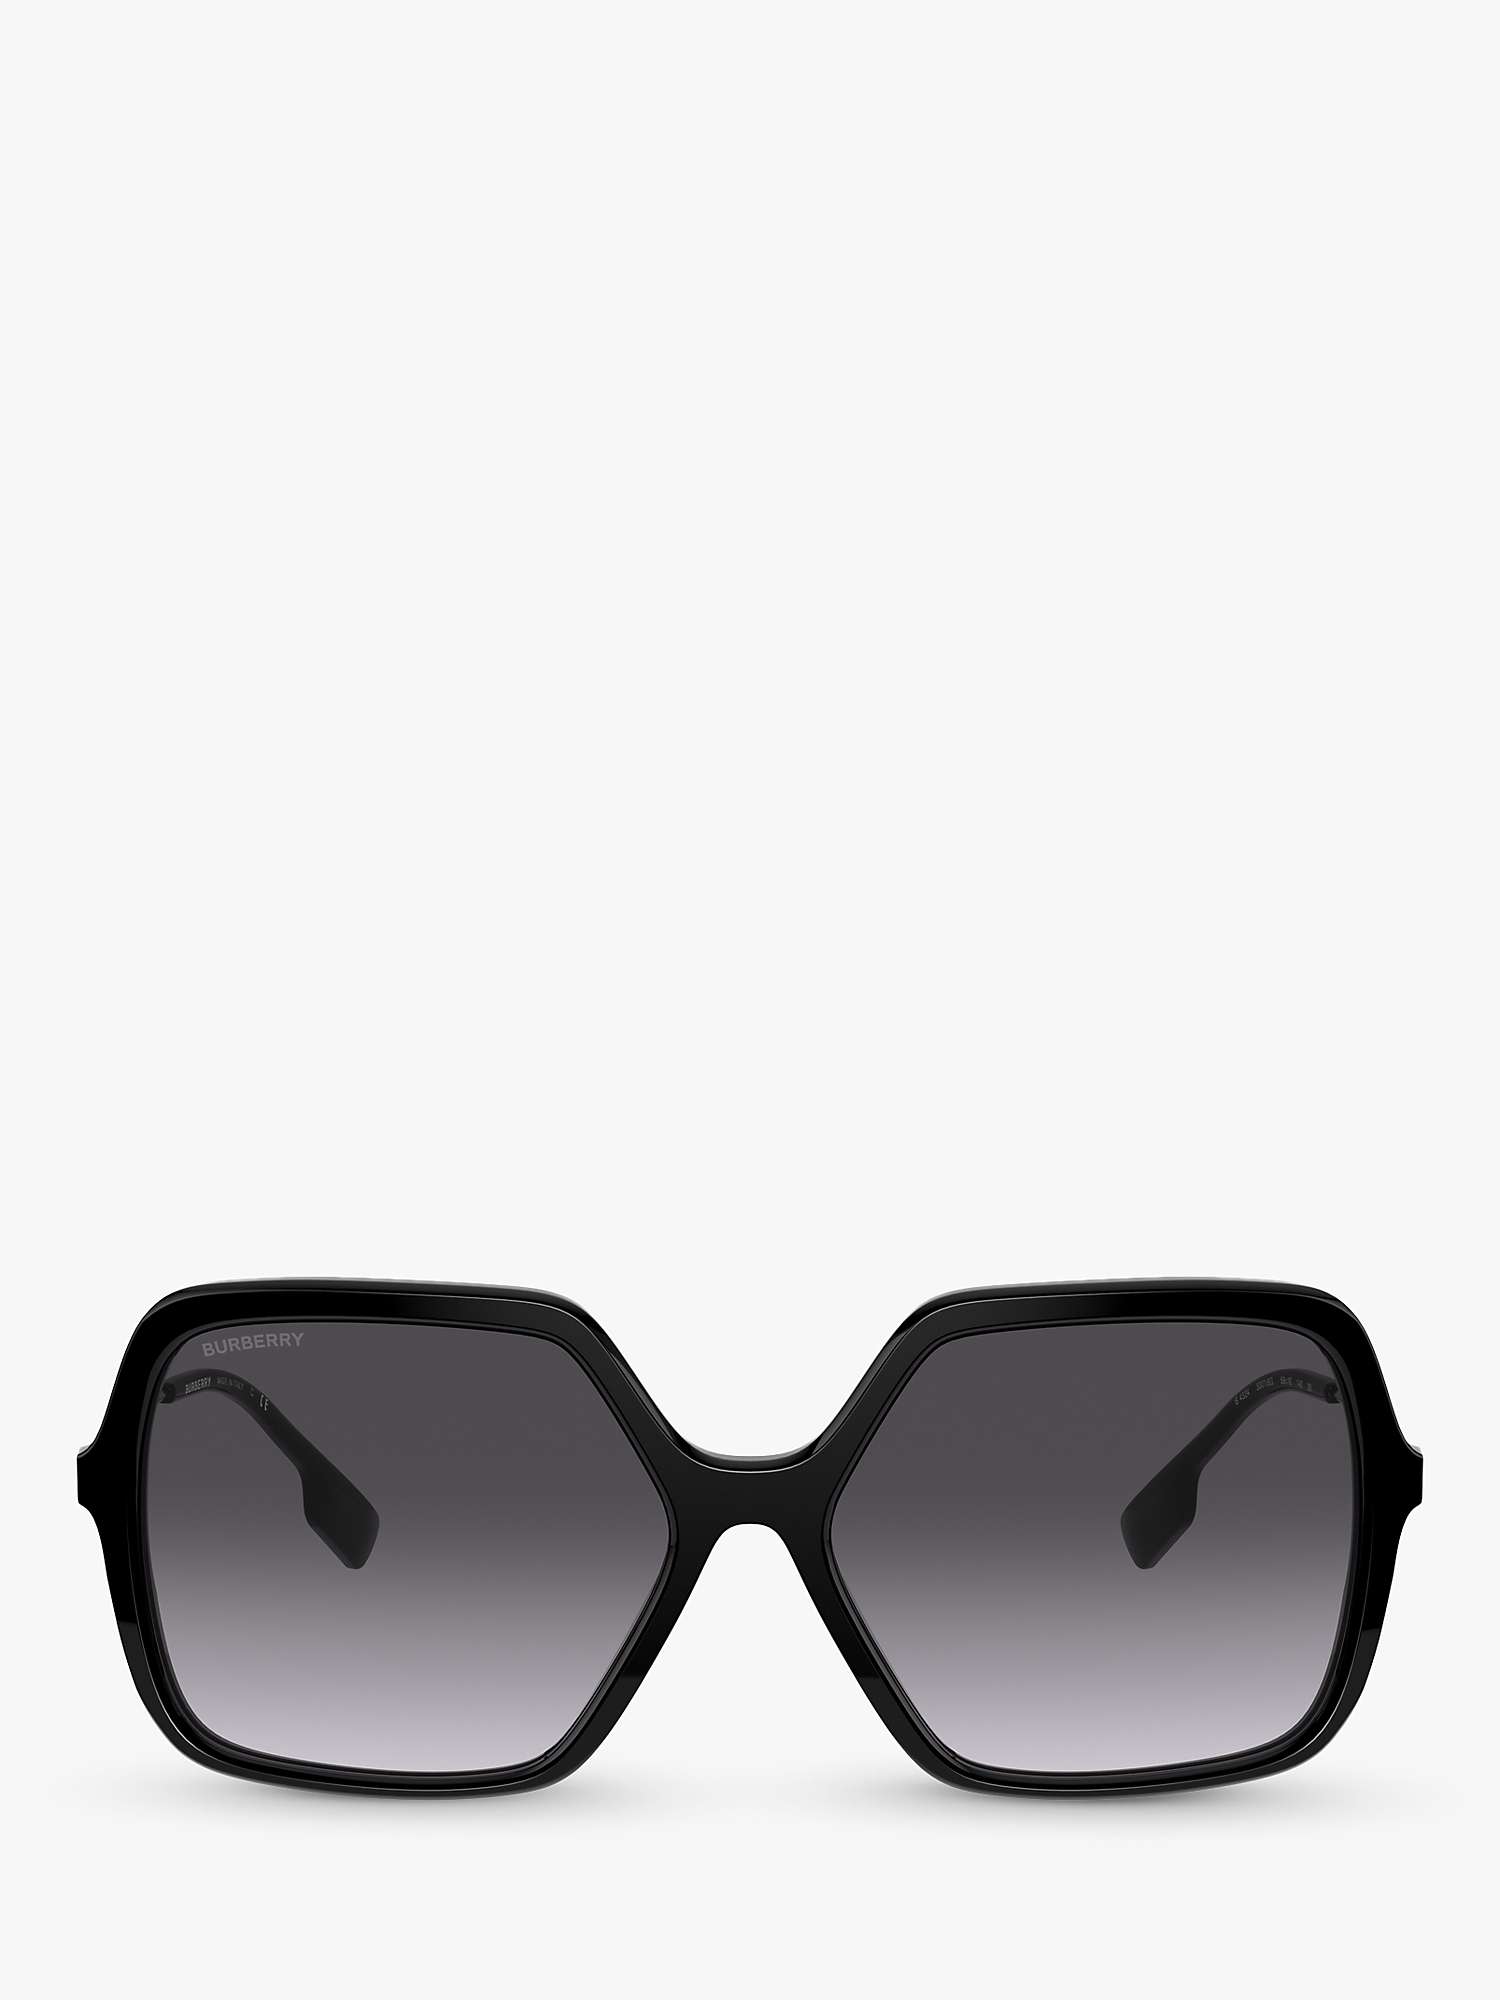 Burberry BE4324 Women's Isabella Square Sunglasses, Black/Grey Gradient ...